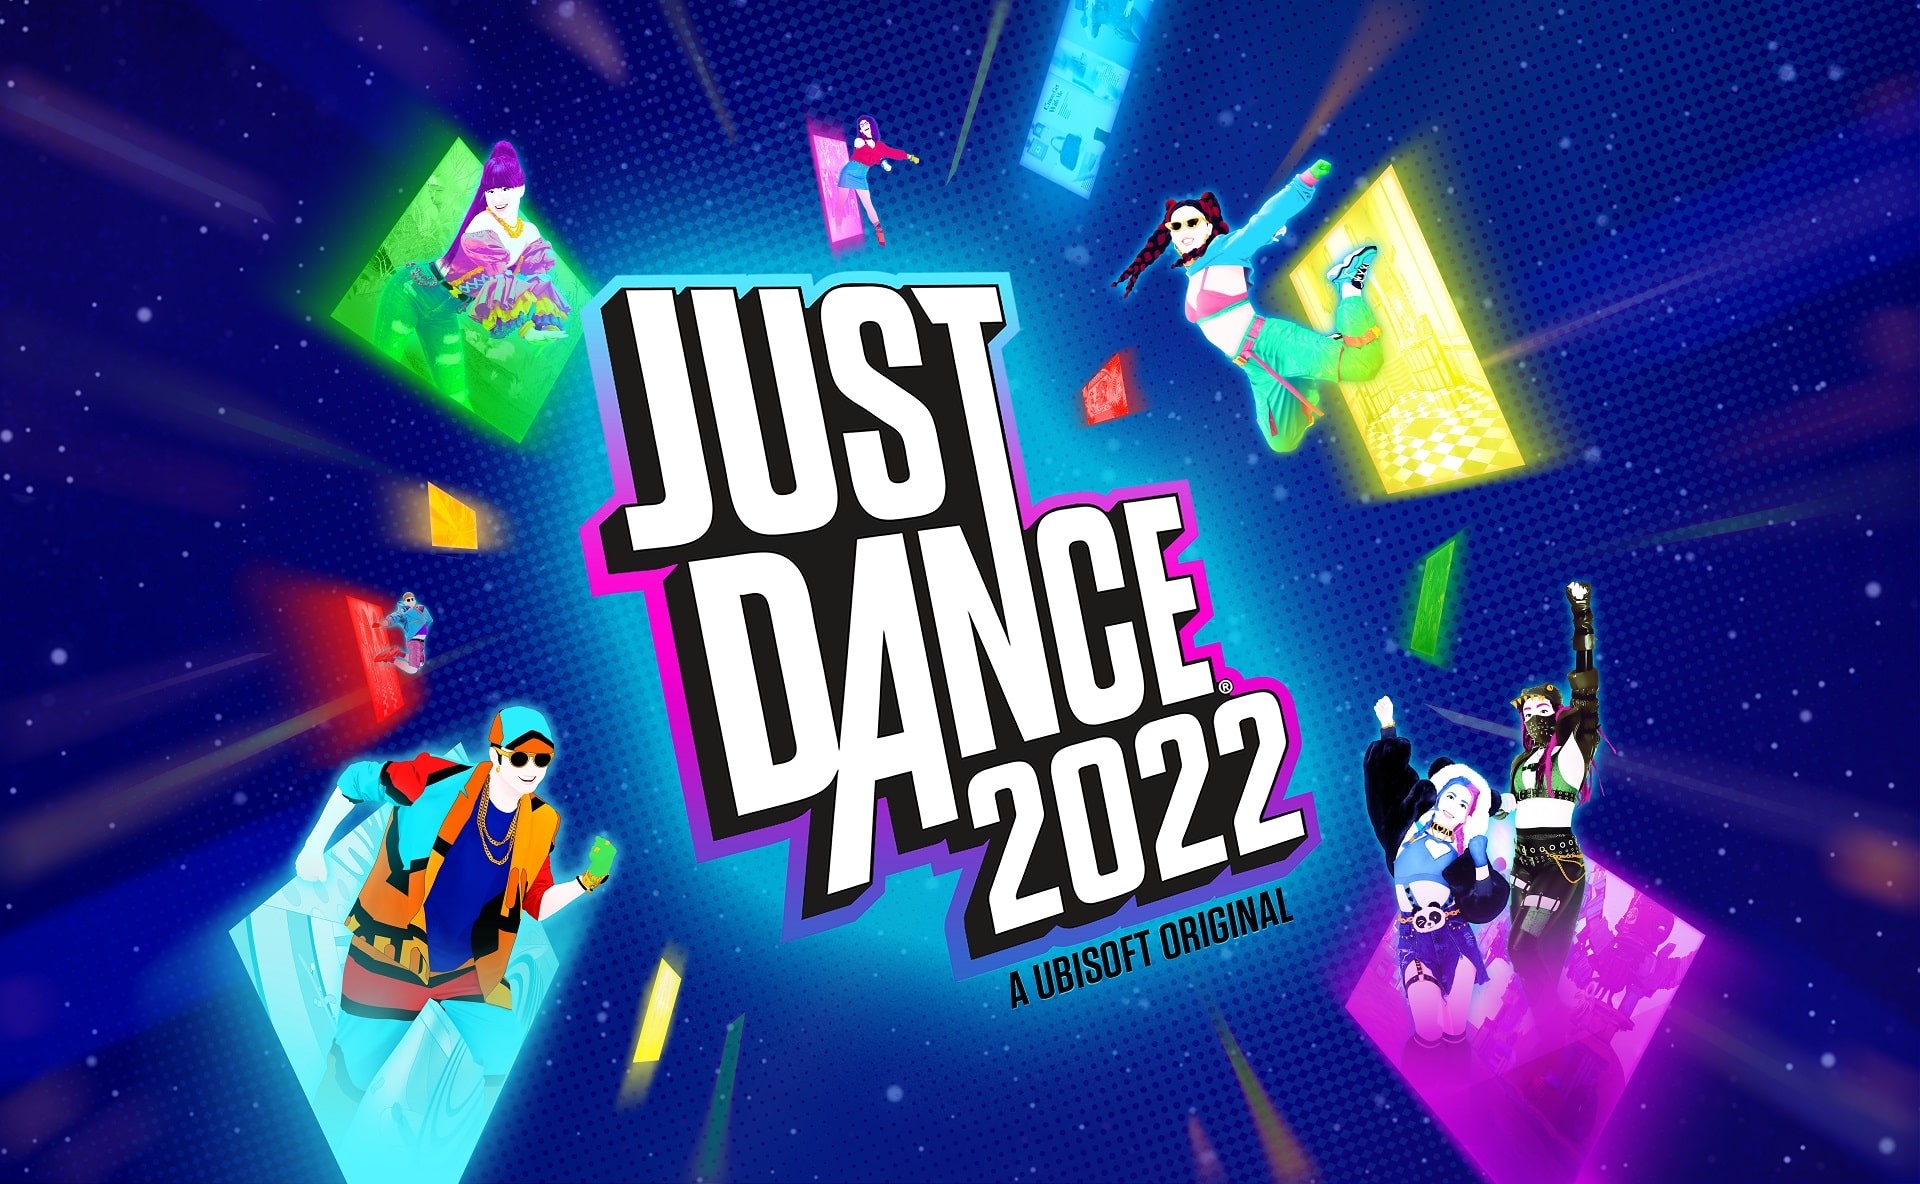 Just dance 2022 min 3